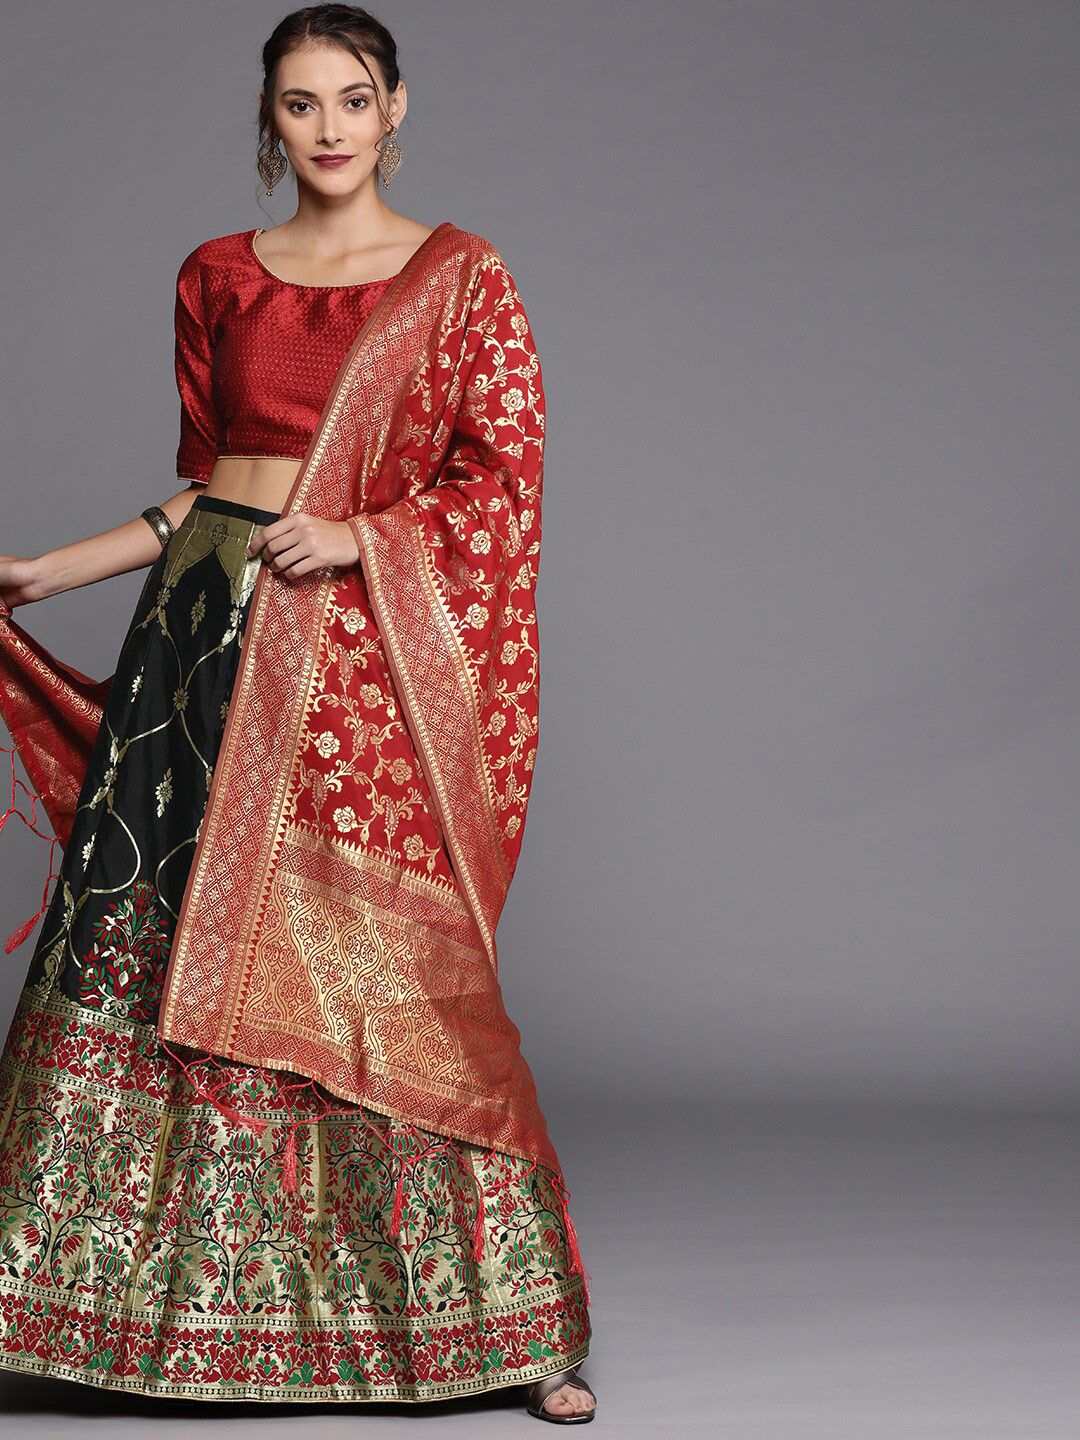 Sangria Woven Design Lehenga Choli Price in India